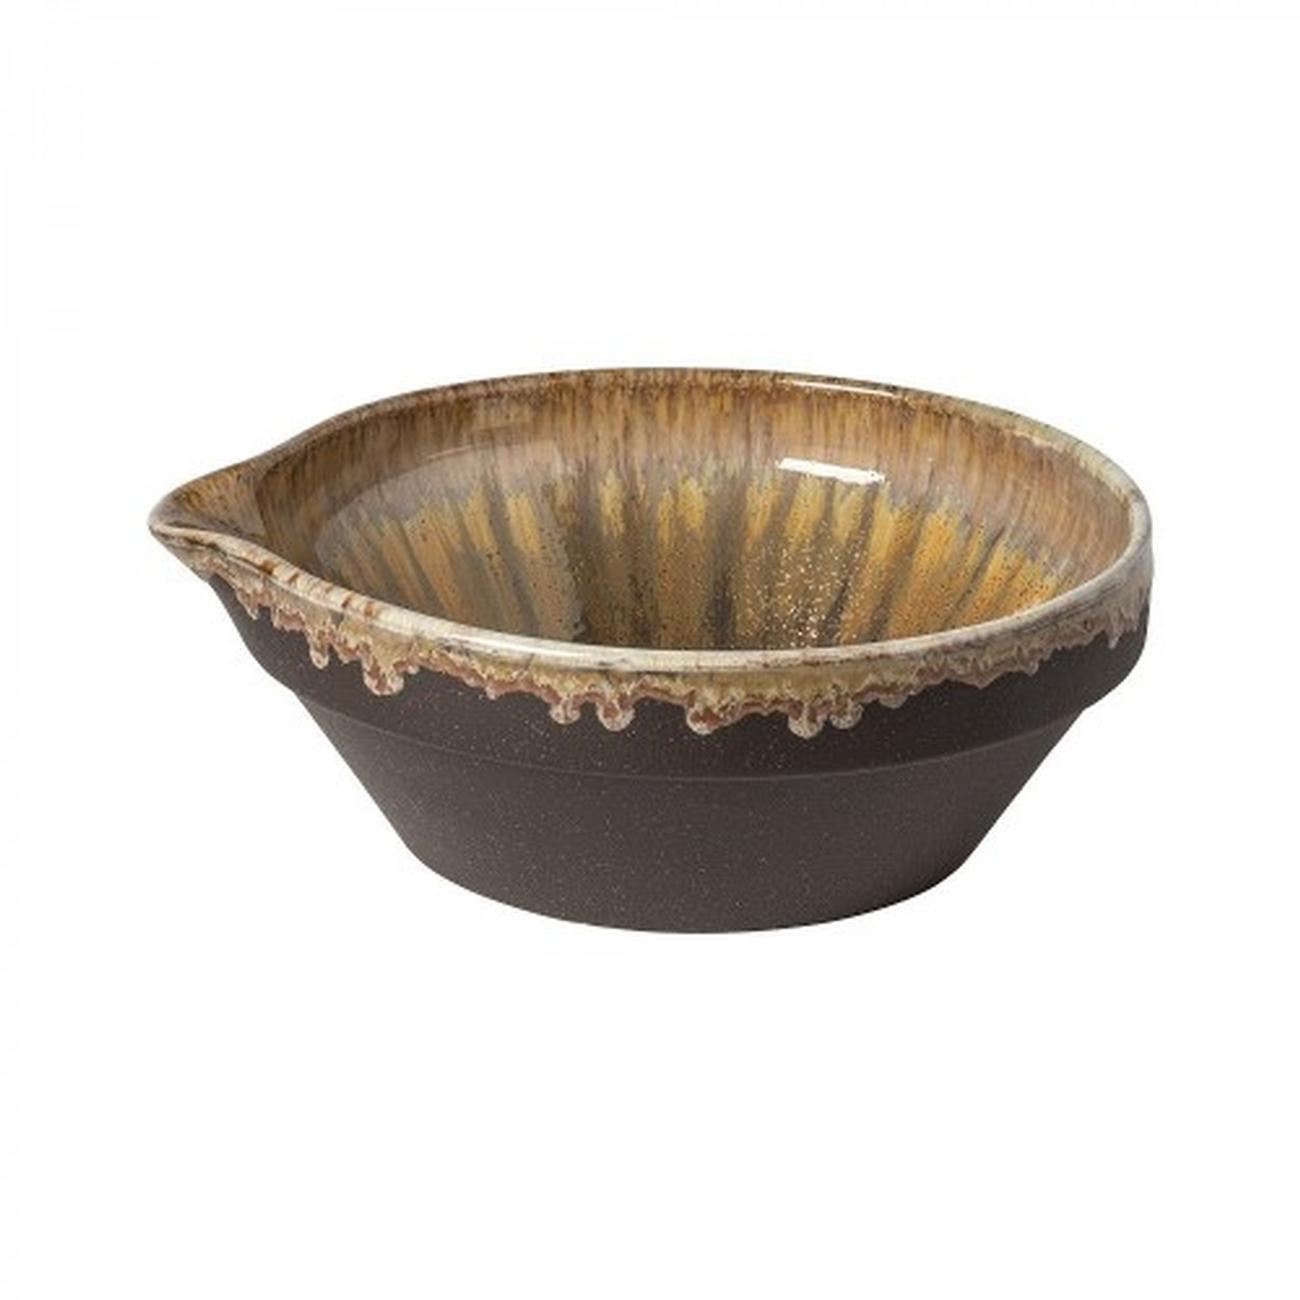 casafina-poterie-mixing-bowl-27cm-mocha-latte - Casafina Poterie Mixing Bowl 27cm